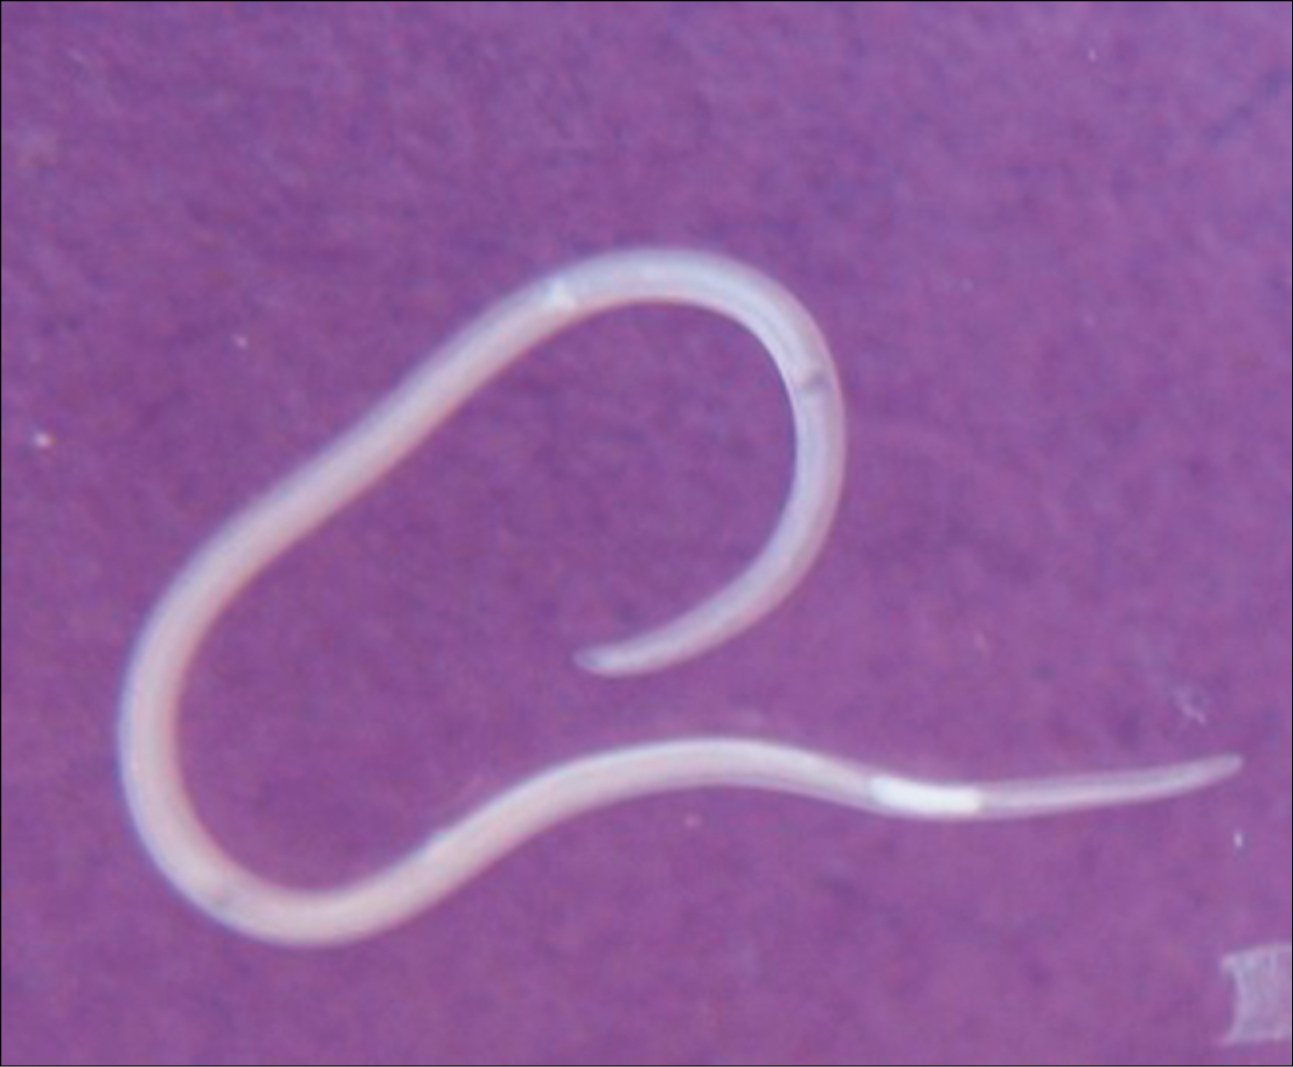    Fig. 19.4-1.  Larva de  Anisakis simplex  con estómago visible (proporcionado por la Dra. Beata Szostakowska) 